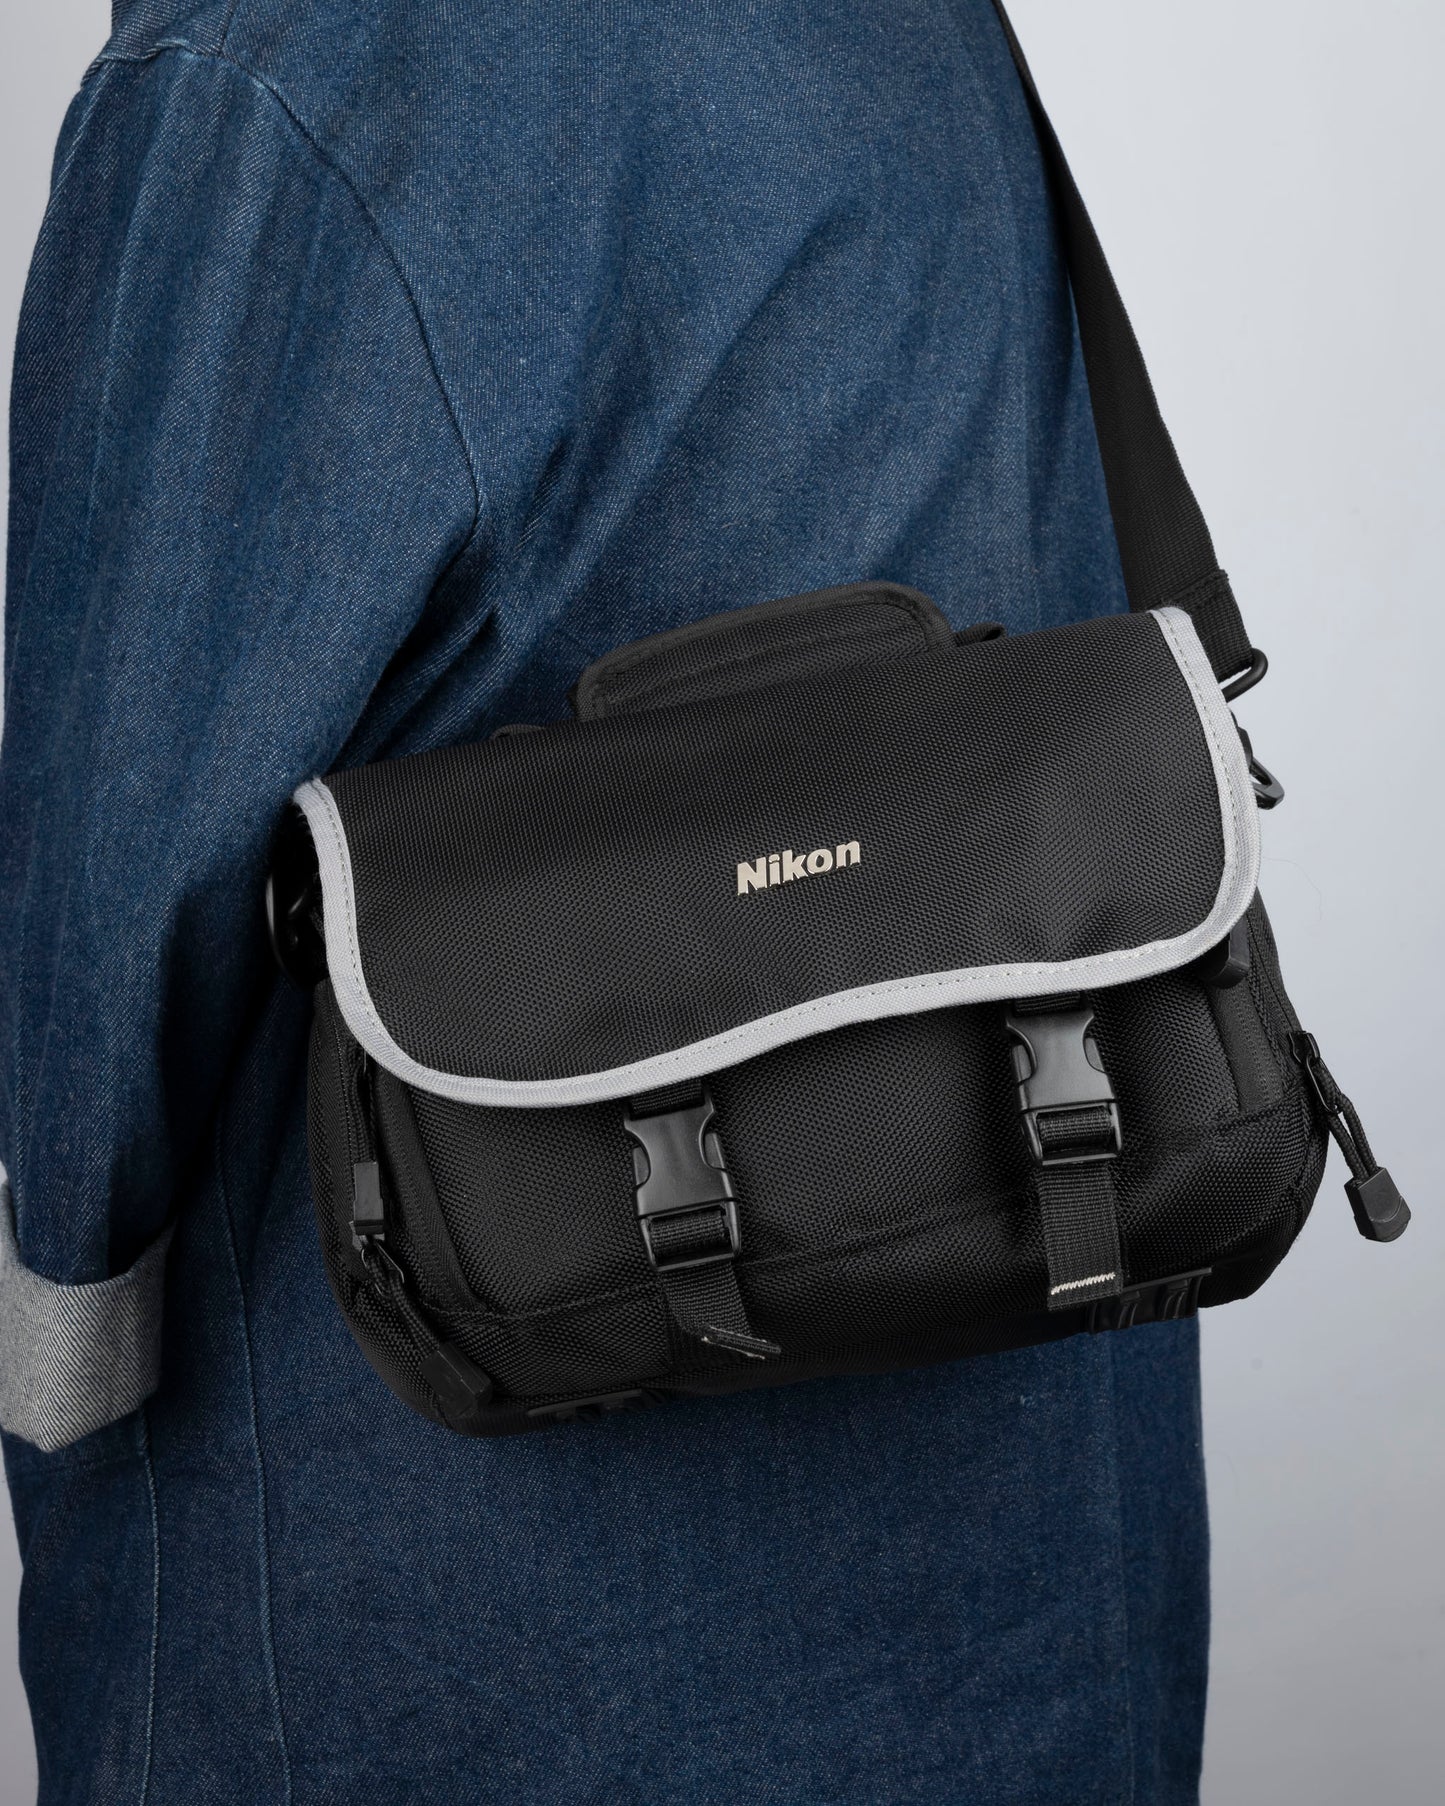 Nikon mid-sized black and grey camera bag